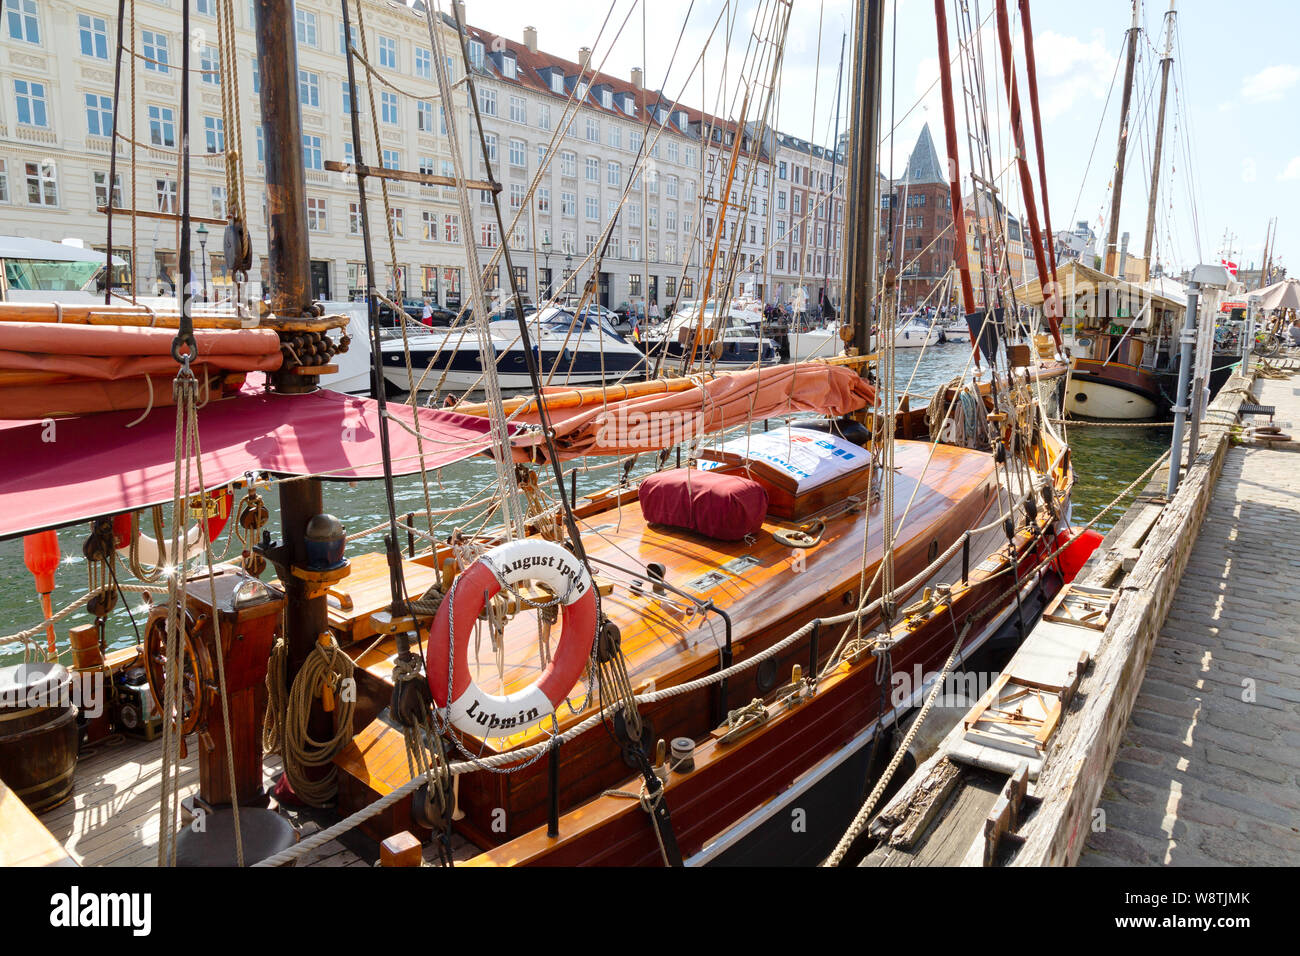 Kopenhagen Nyhavn - Boote in Nyhavn Kanal Hafen, Kopenhagen Dänemark Europa Stockfoto